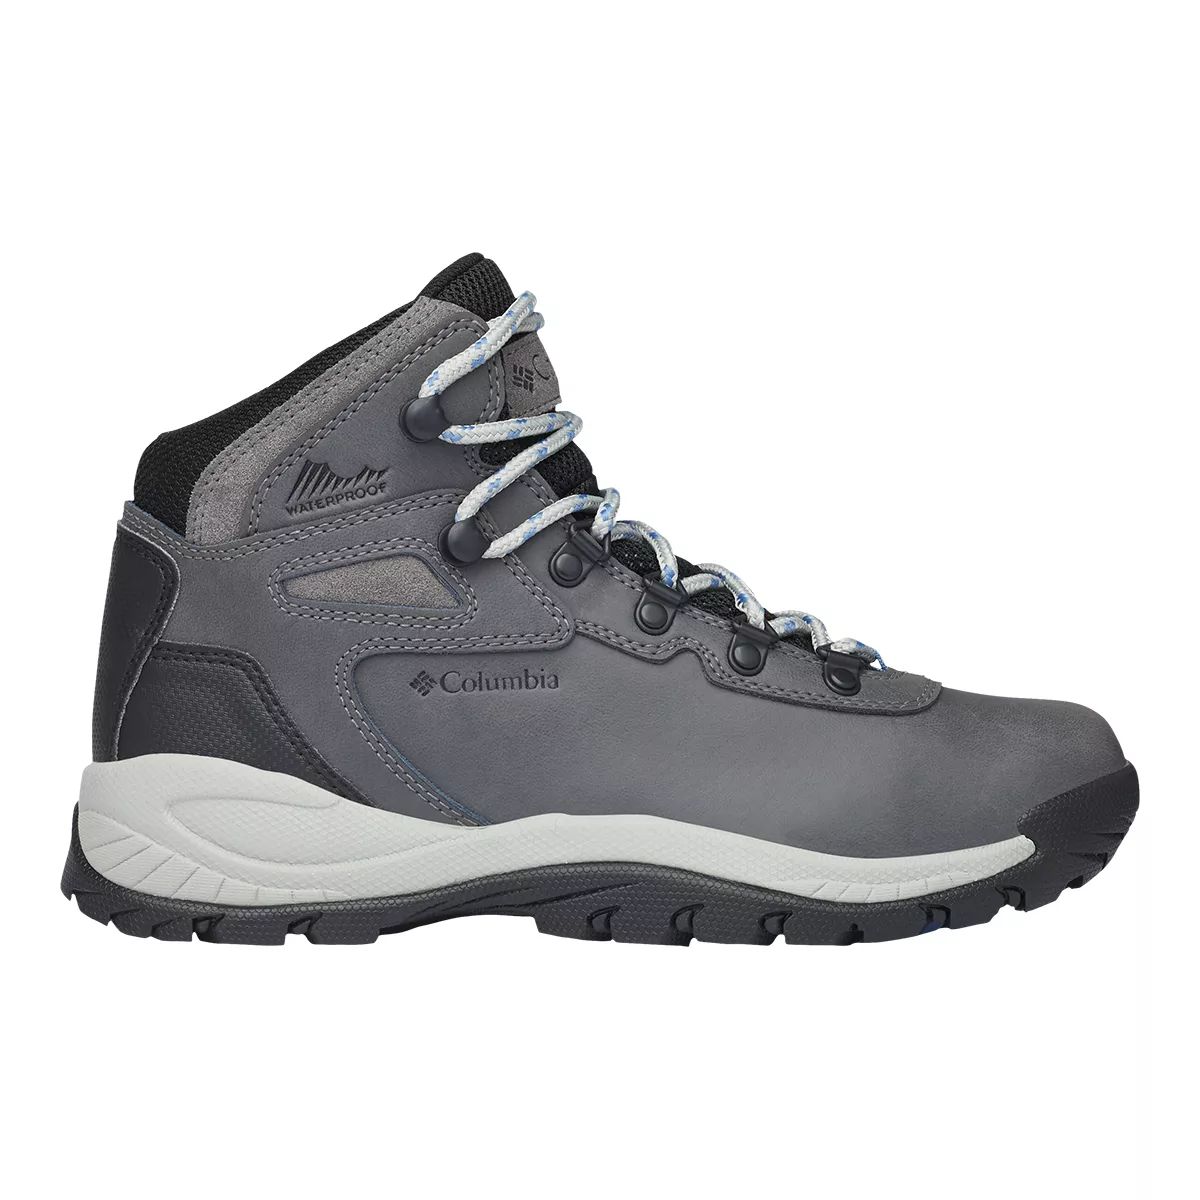 Image of Columbia Women's Newton Ridge Plus Lightweight Waterproof Hiking Shoes